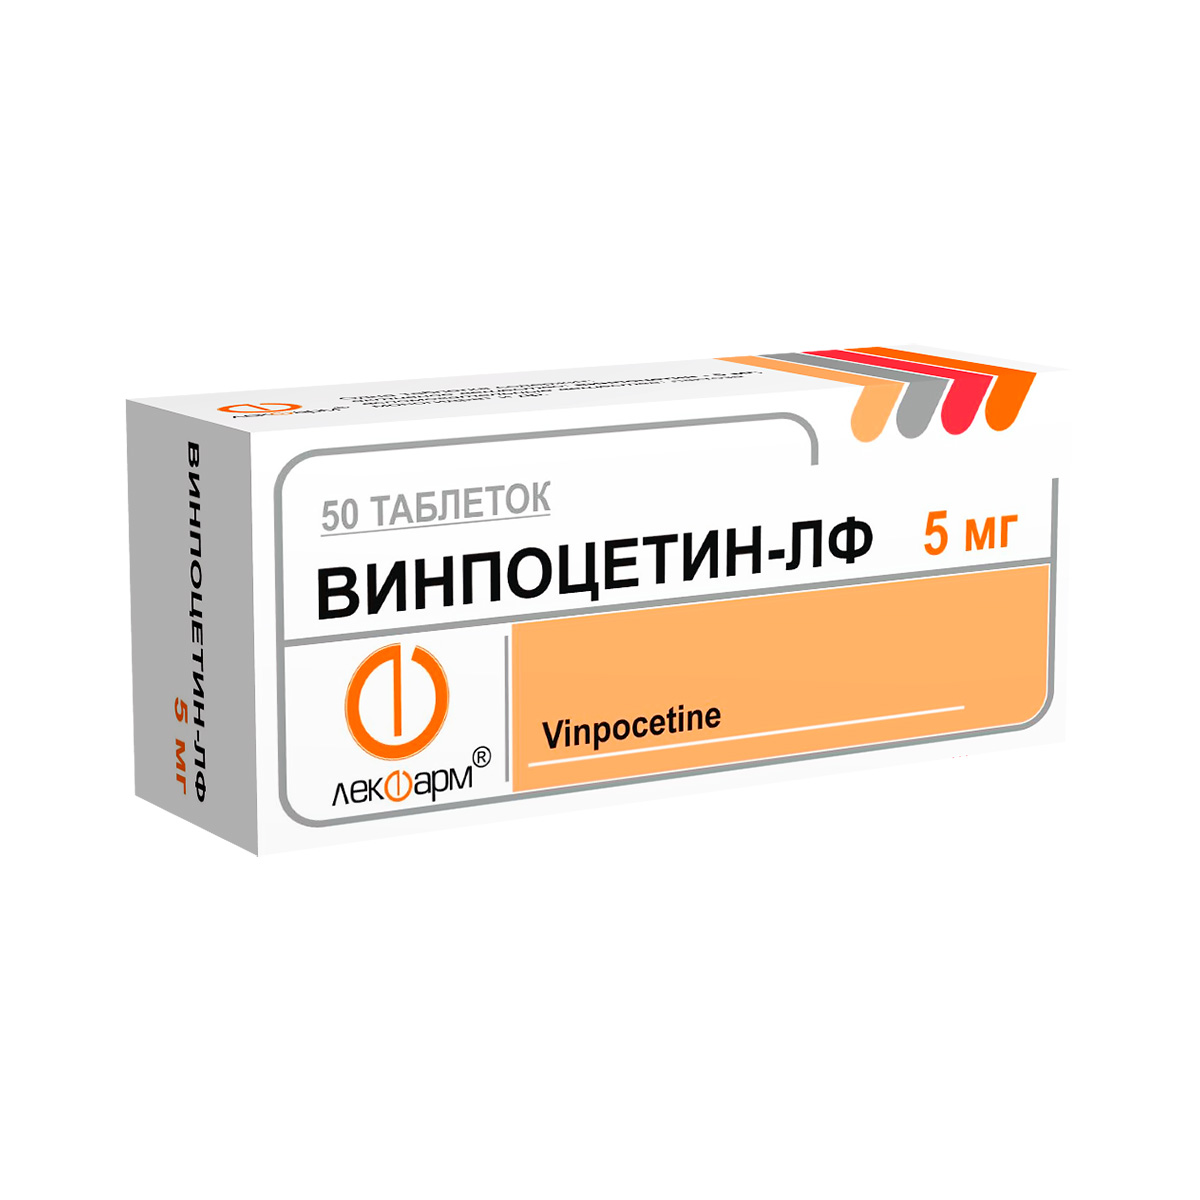 Винпоцетин-ЛФ 5 мг таблетки 50 шт